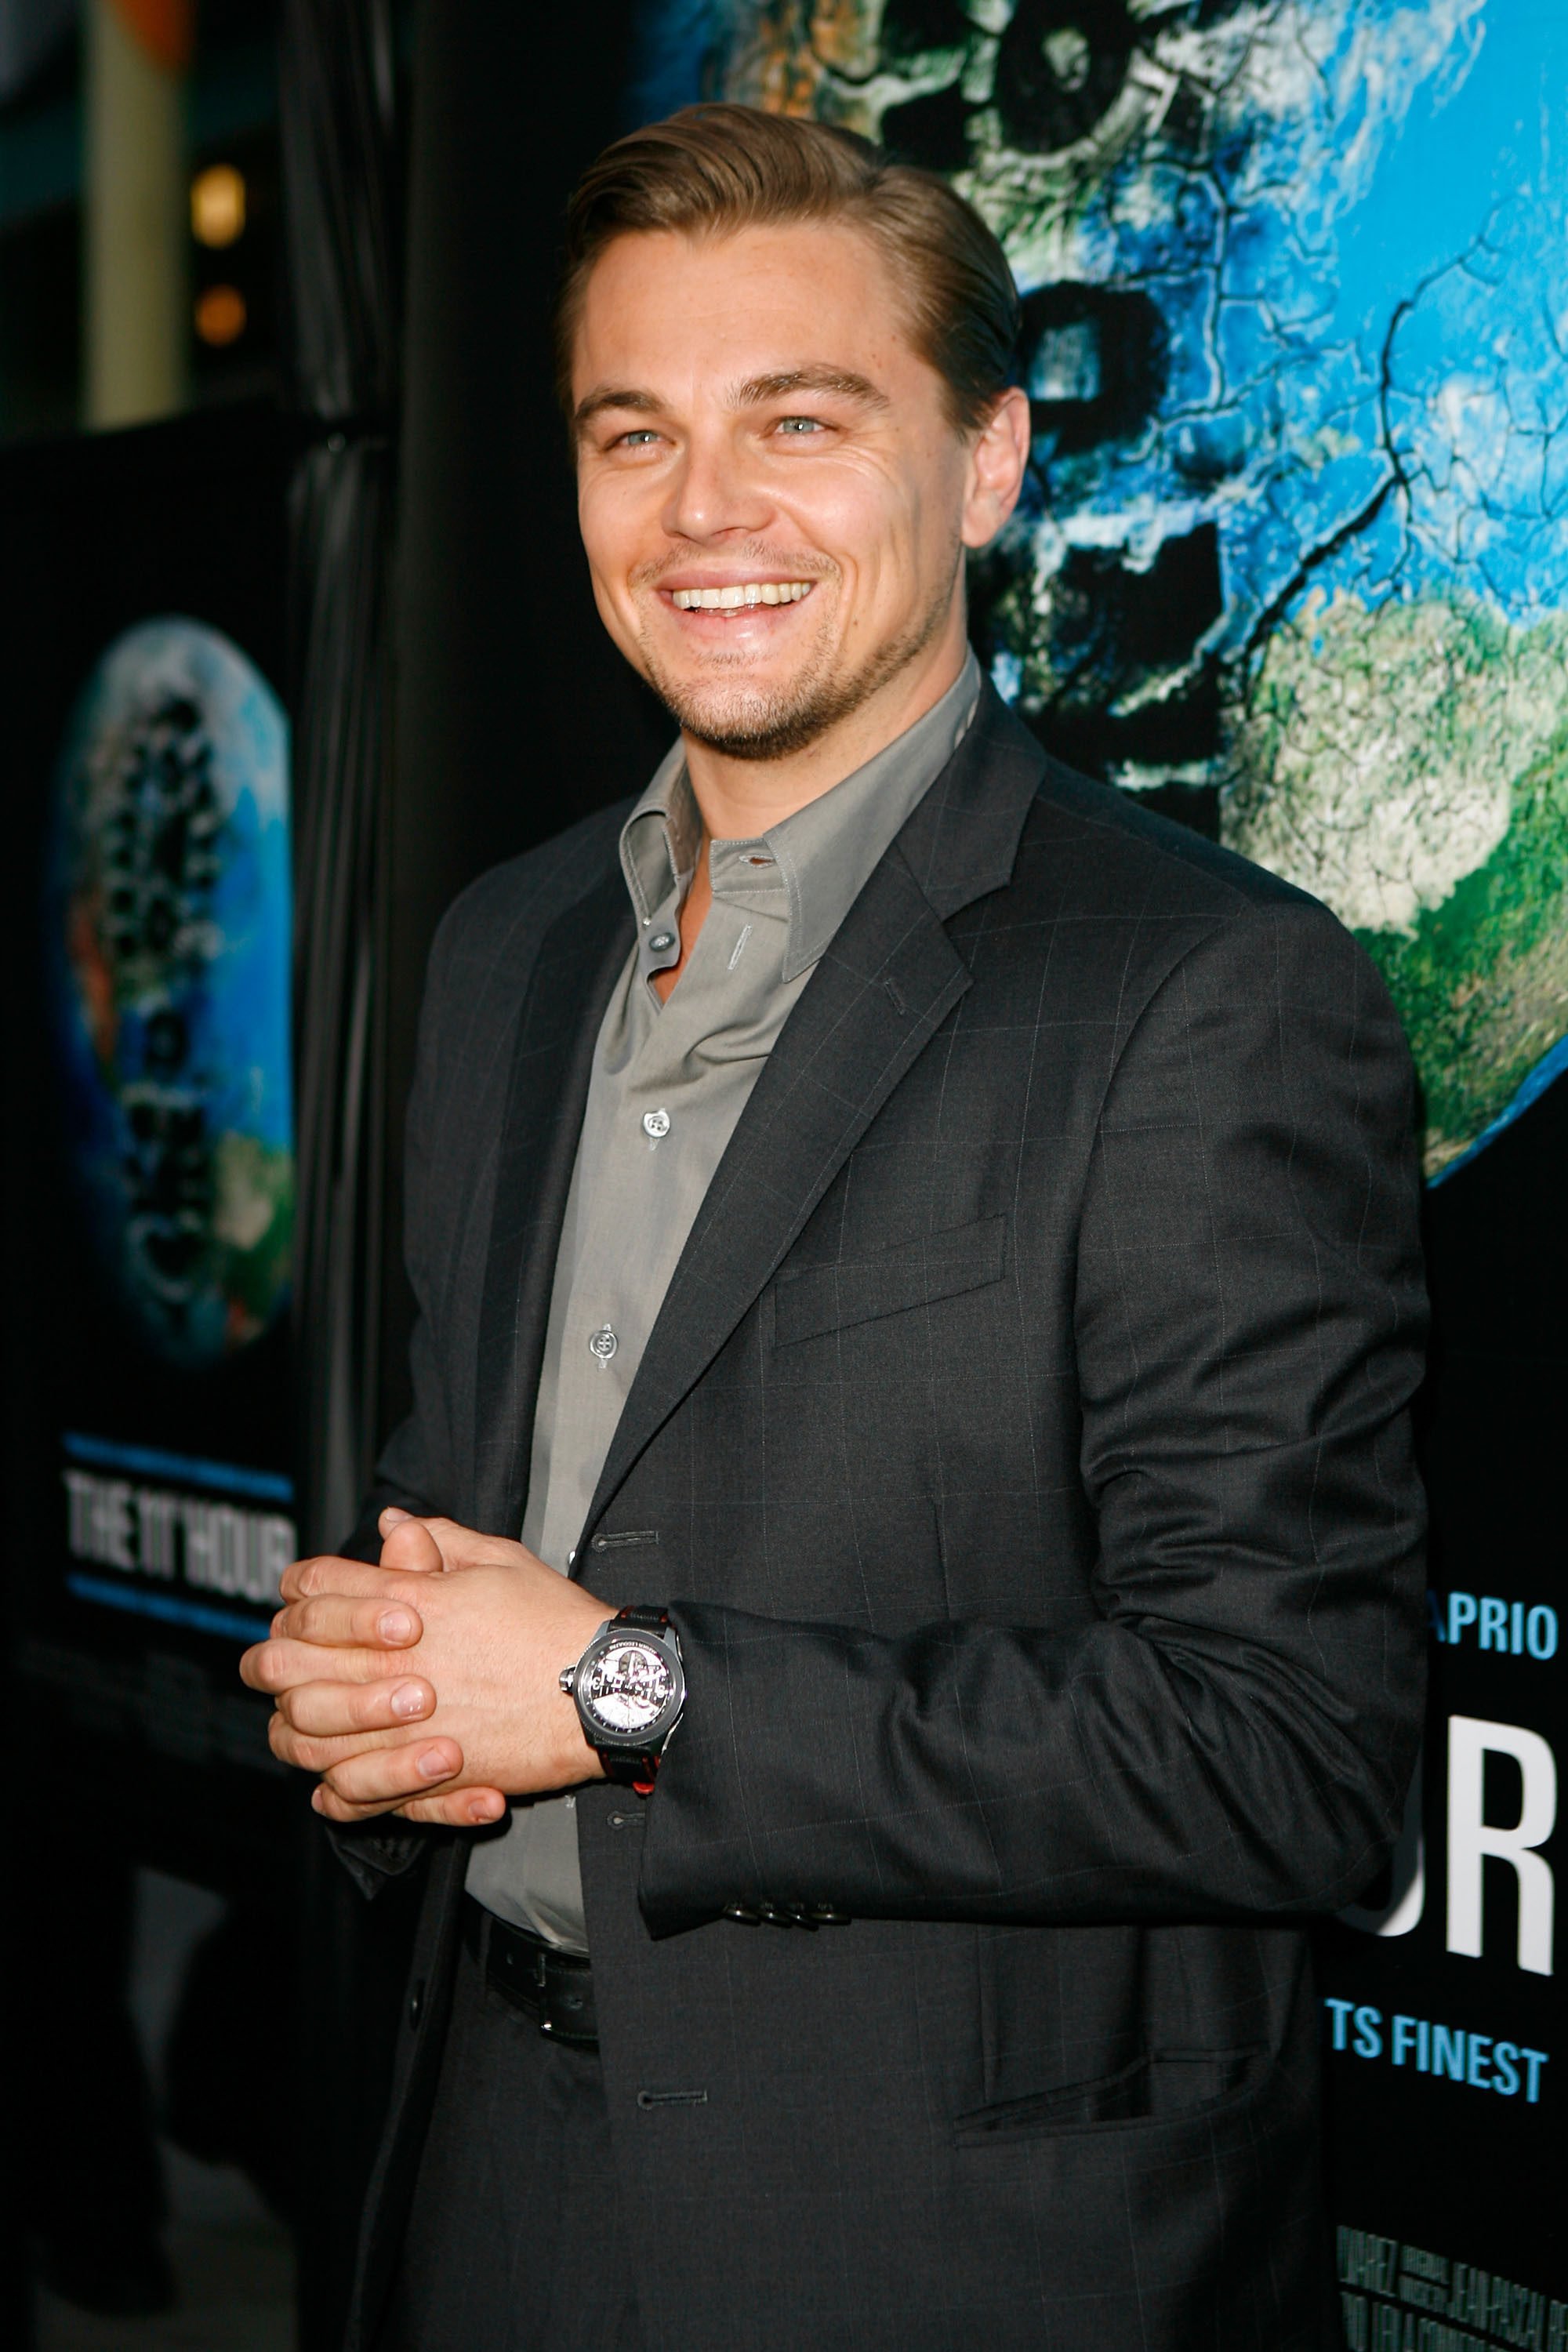 Leonardo DiCaprio Wears 2021's Insta-Grail Watch